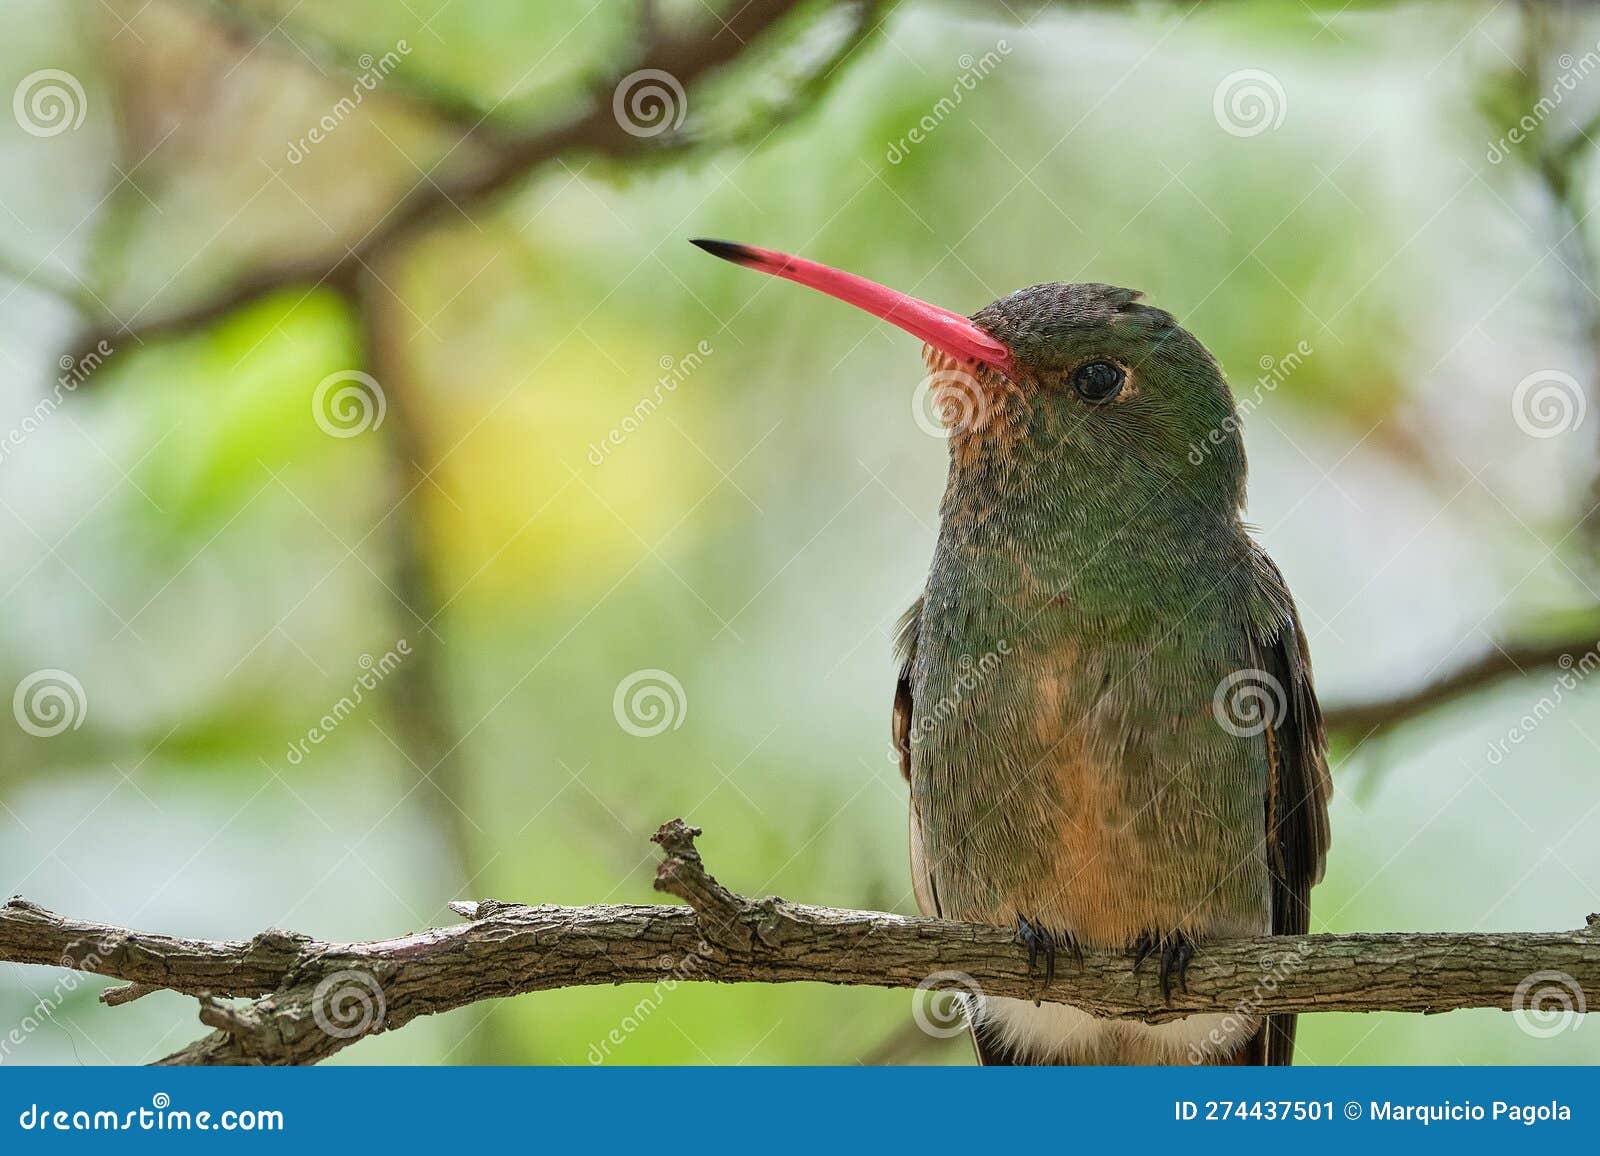 small hummingbird resting on a thin tree branch.